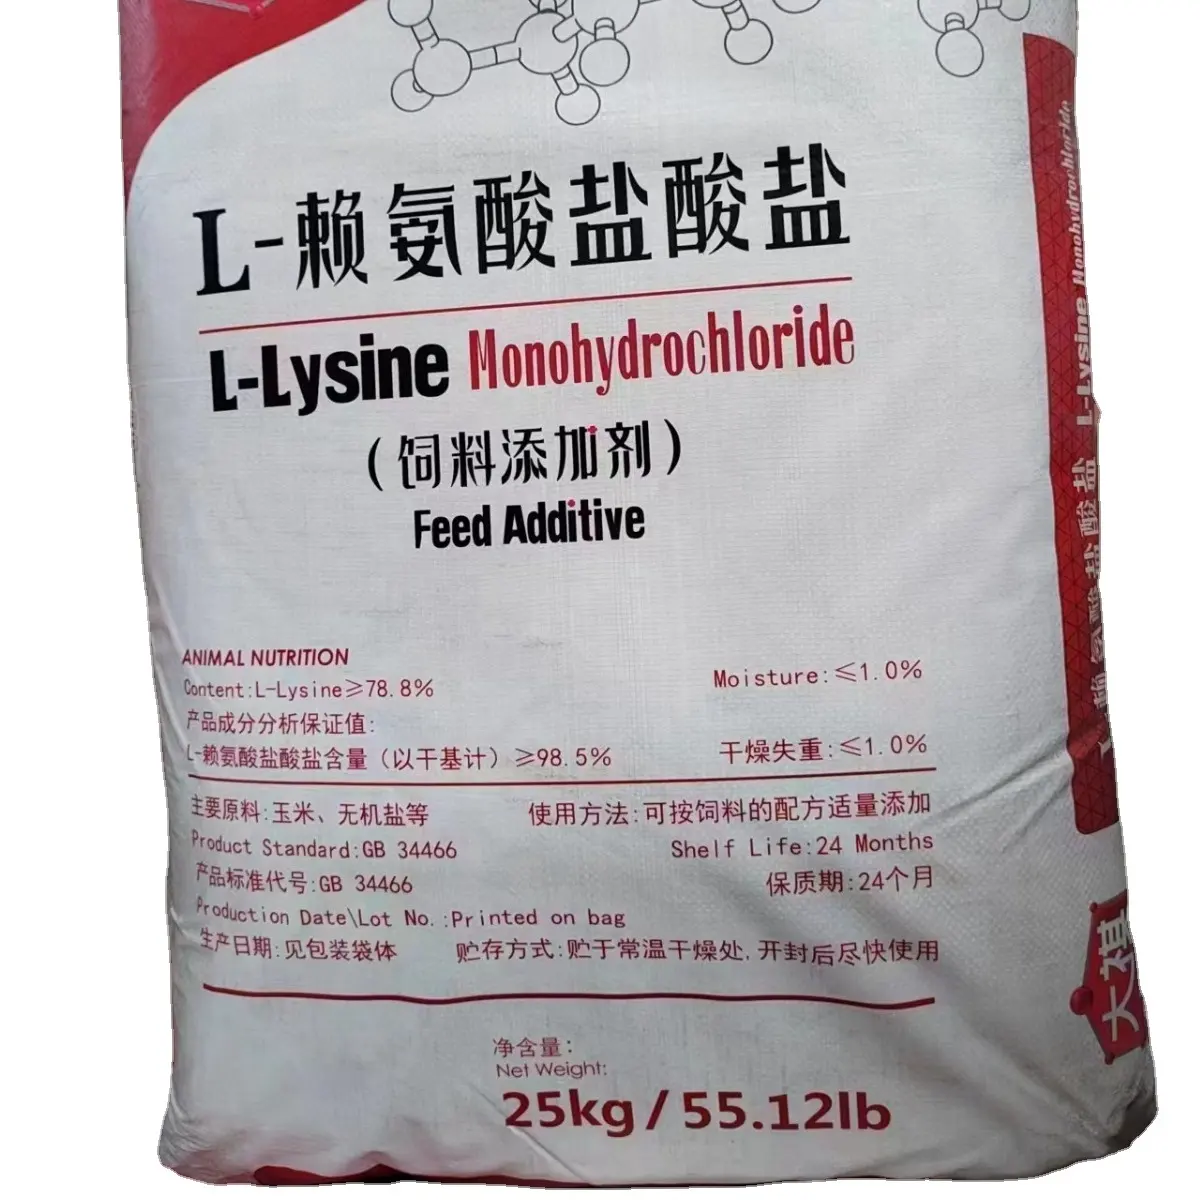 ابحث عن مورد في الصين - افضل موردين L-lysine Hcl - L-Lysine هيدروكلوريد مونهايدروكلوريد